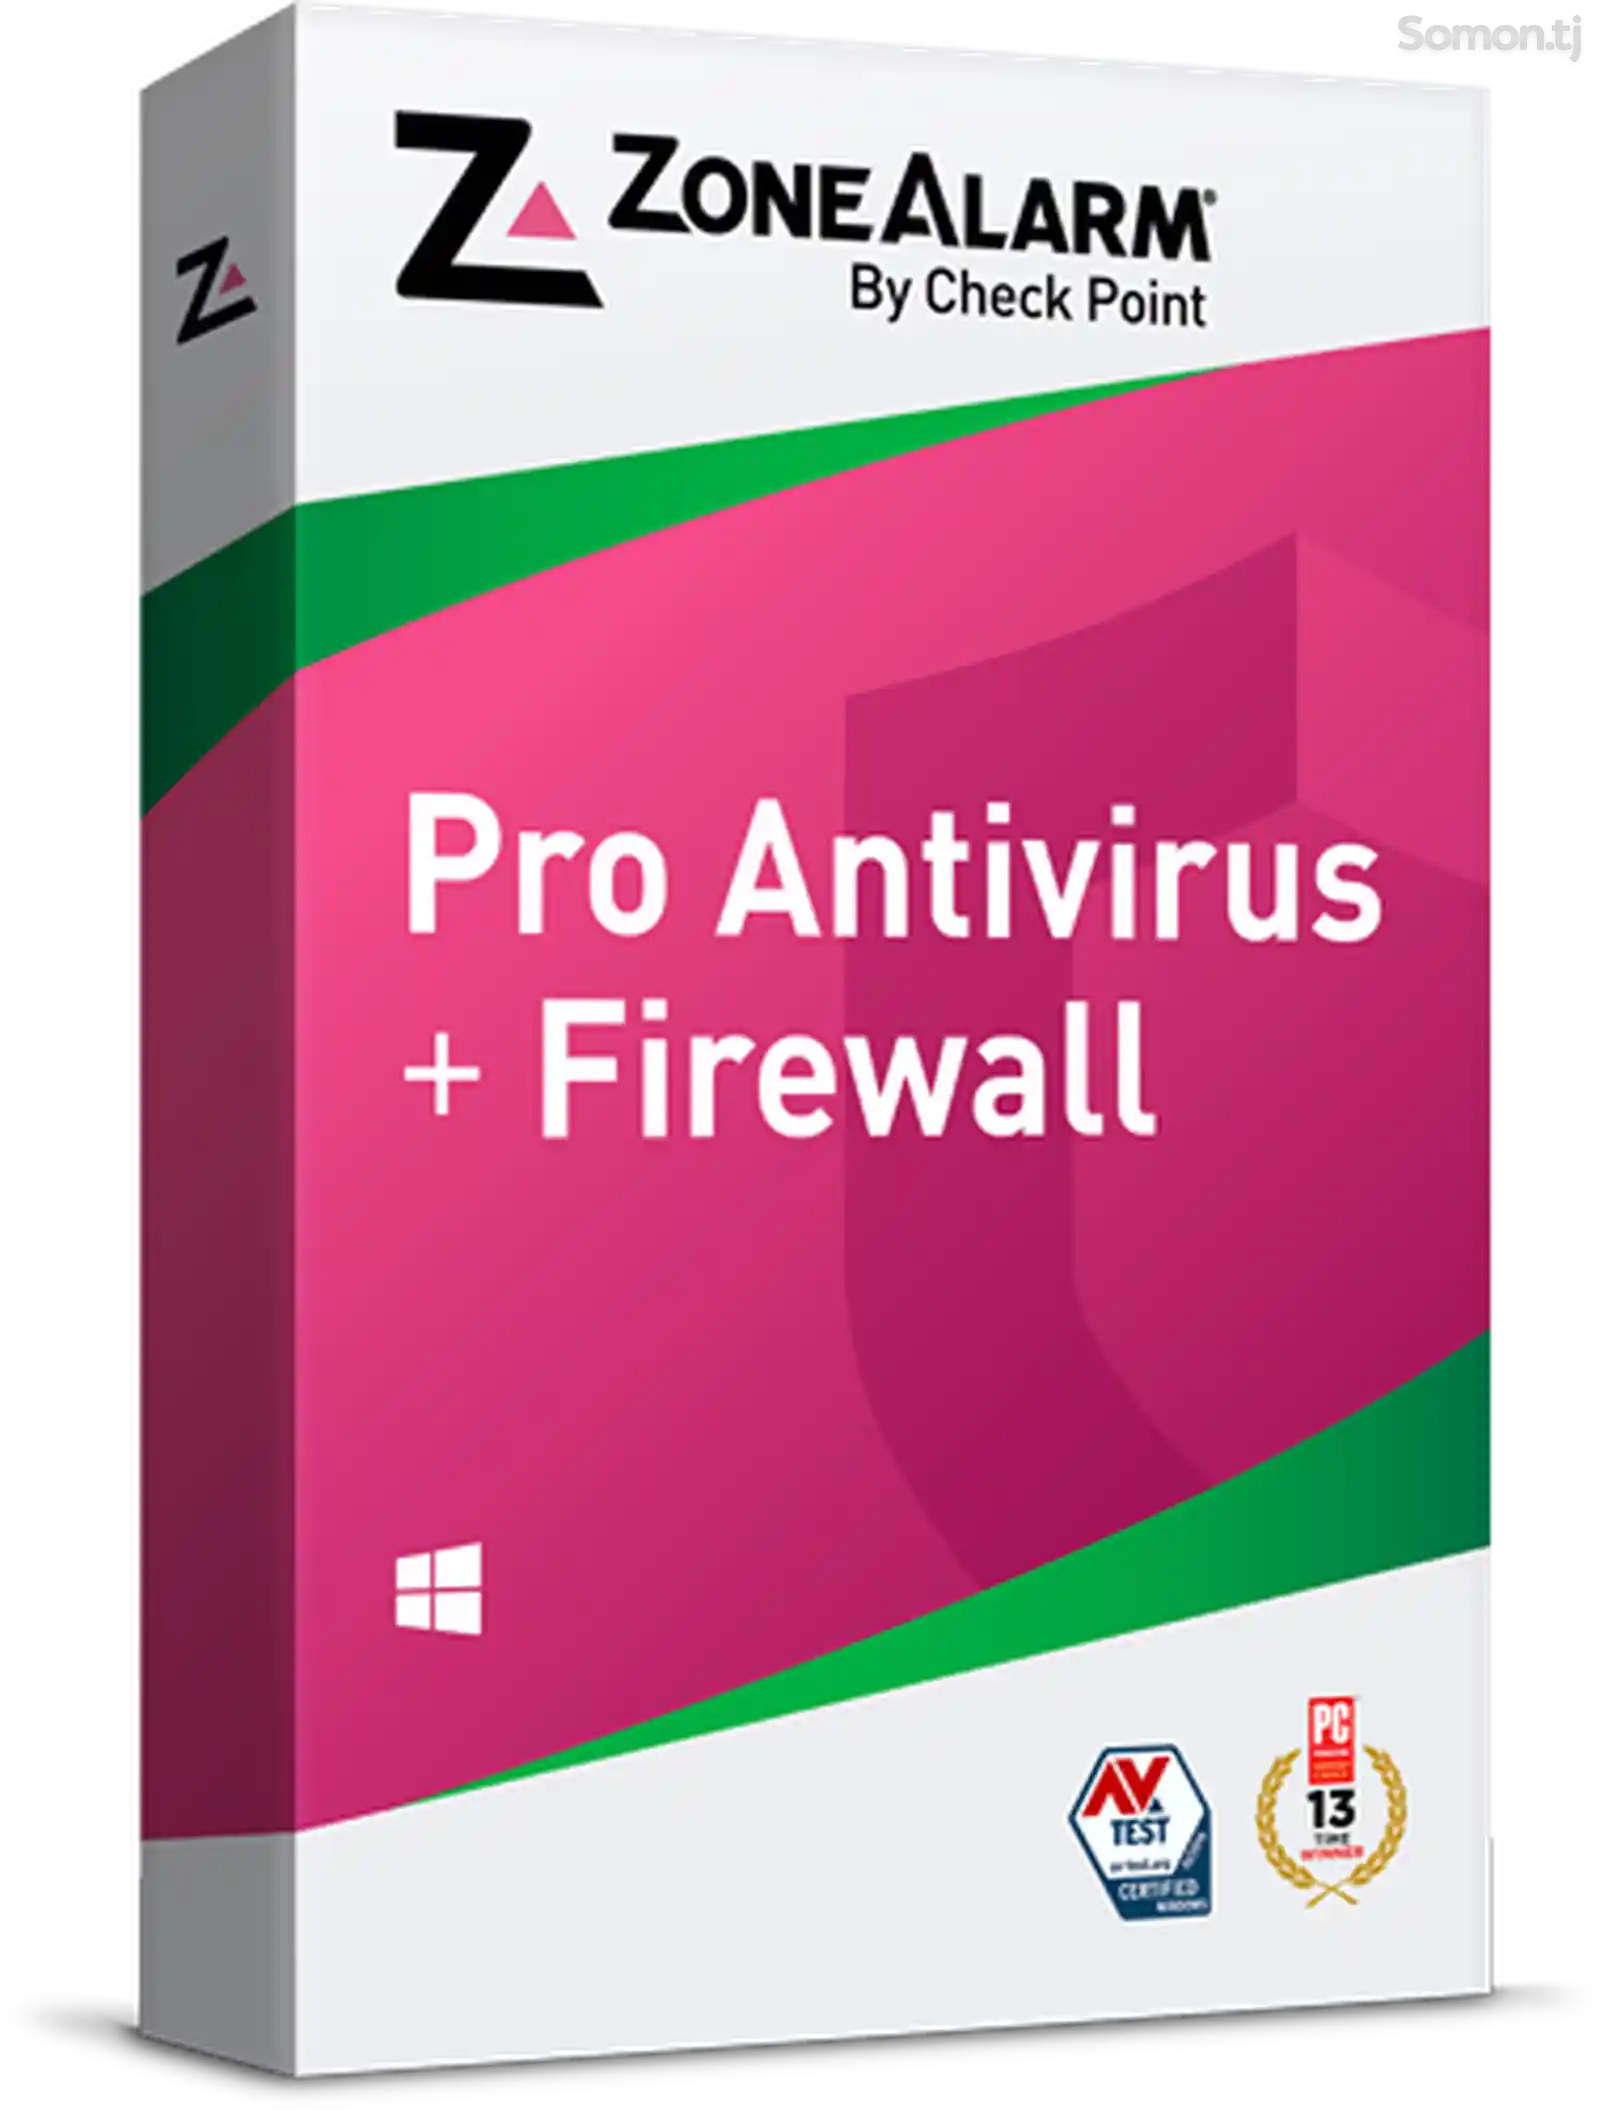 ZoneAlarm Pro Antivirus Firewall - иҷозатнома барои 1 роёна, 1 сол